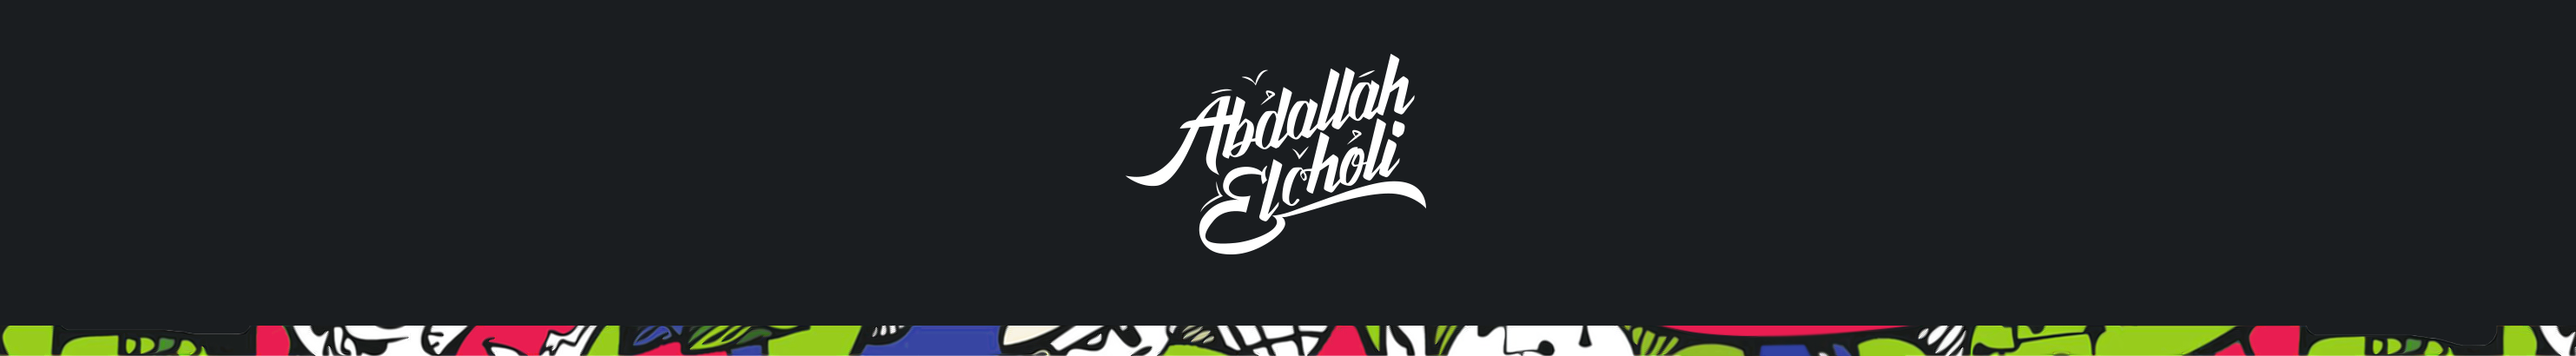 Abdallah El Choli 的个人资料横幅